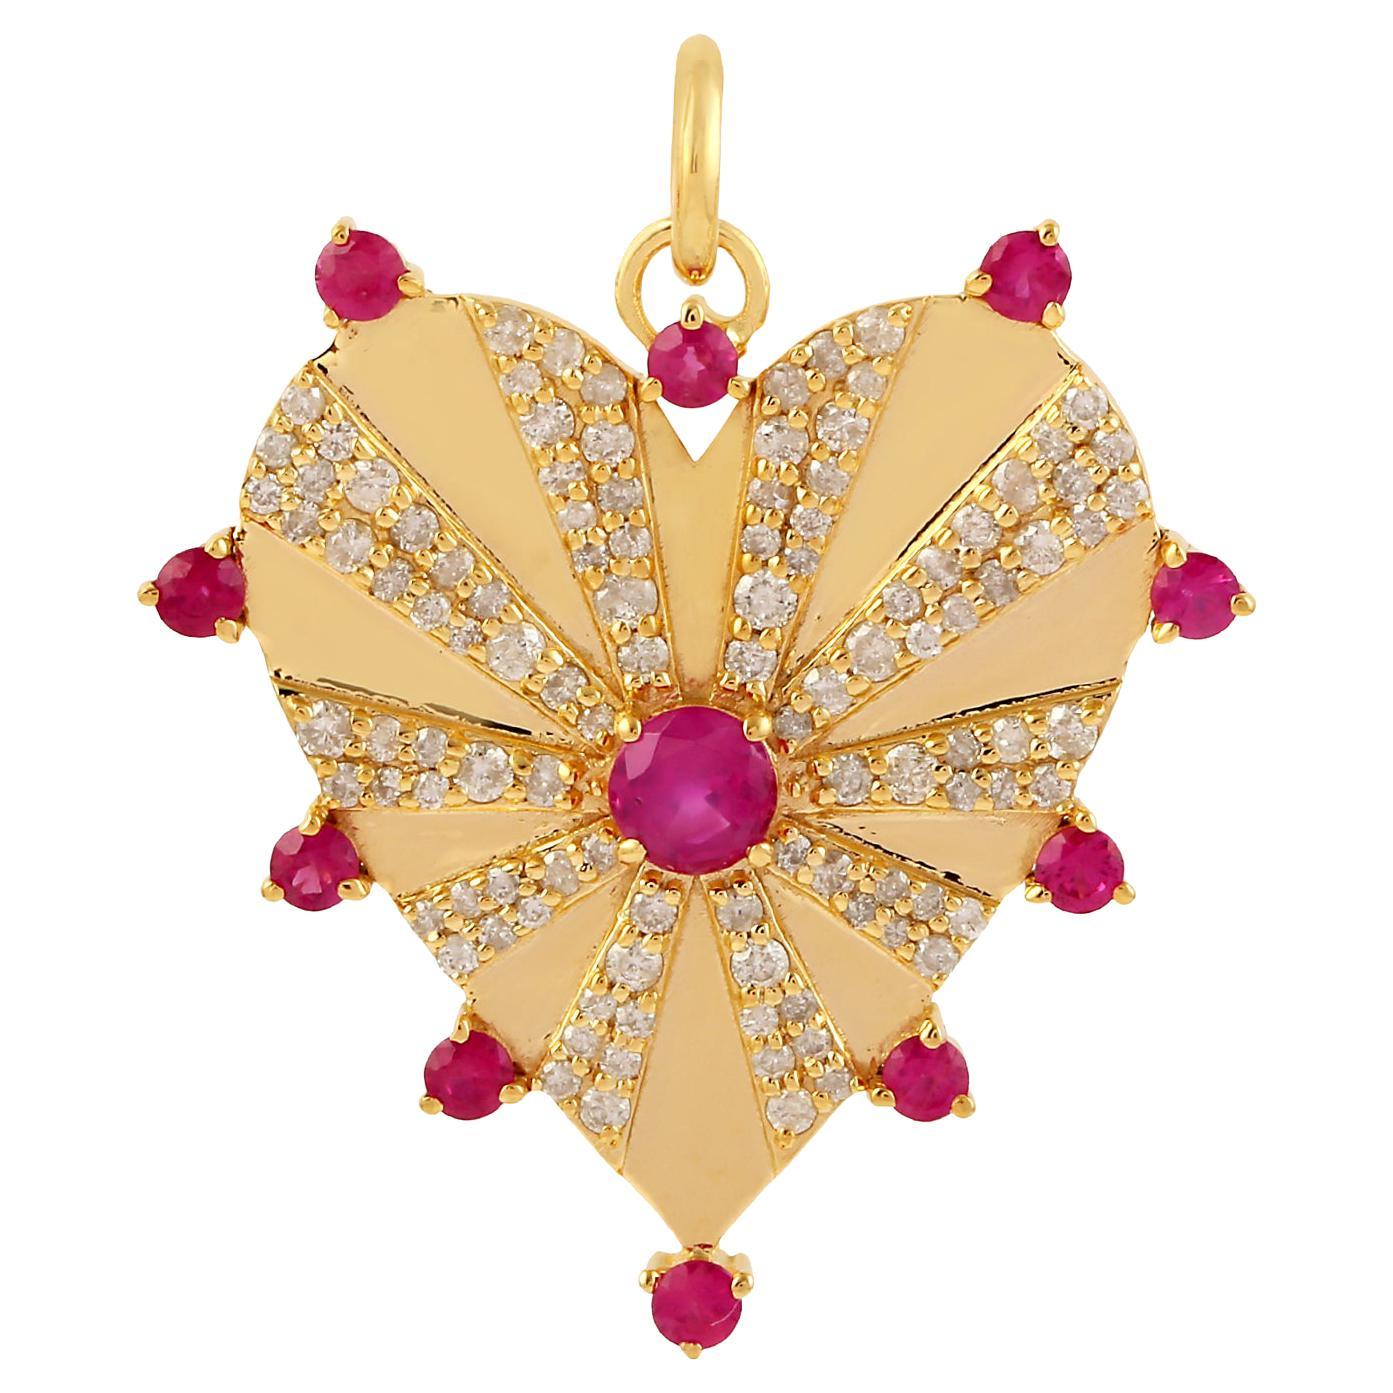 Heart Diamond 14 Karat Gold Charm Pendant Necklace